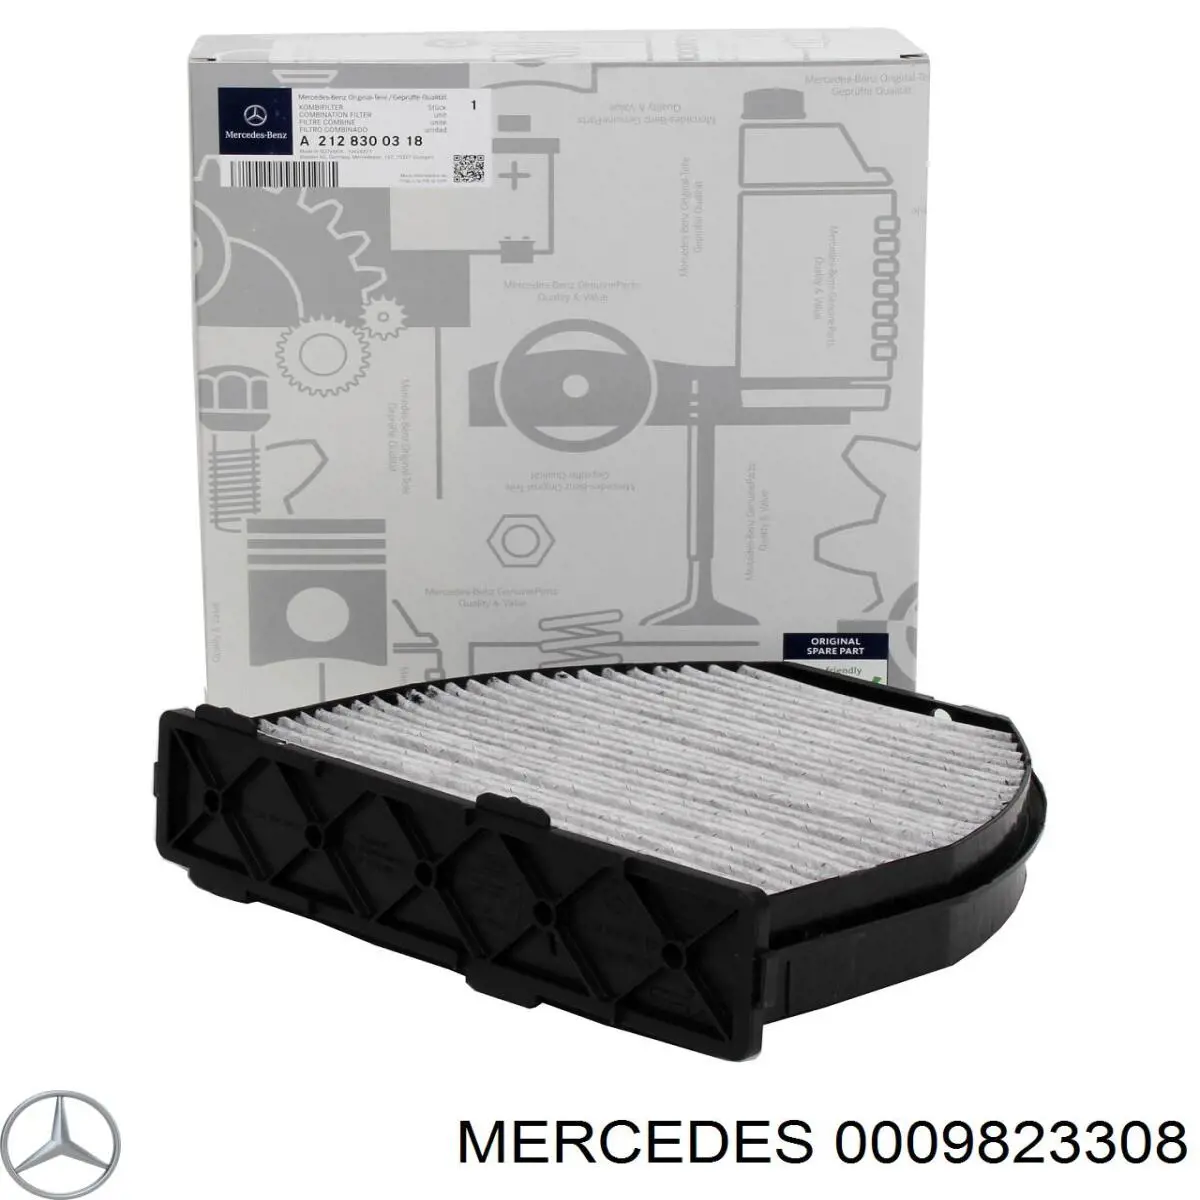 Batería de Arranque Mercedes (0009823308)